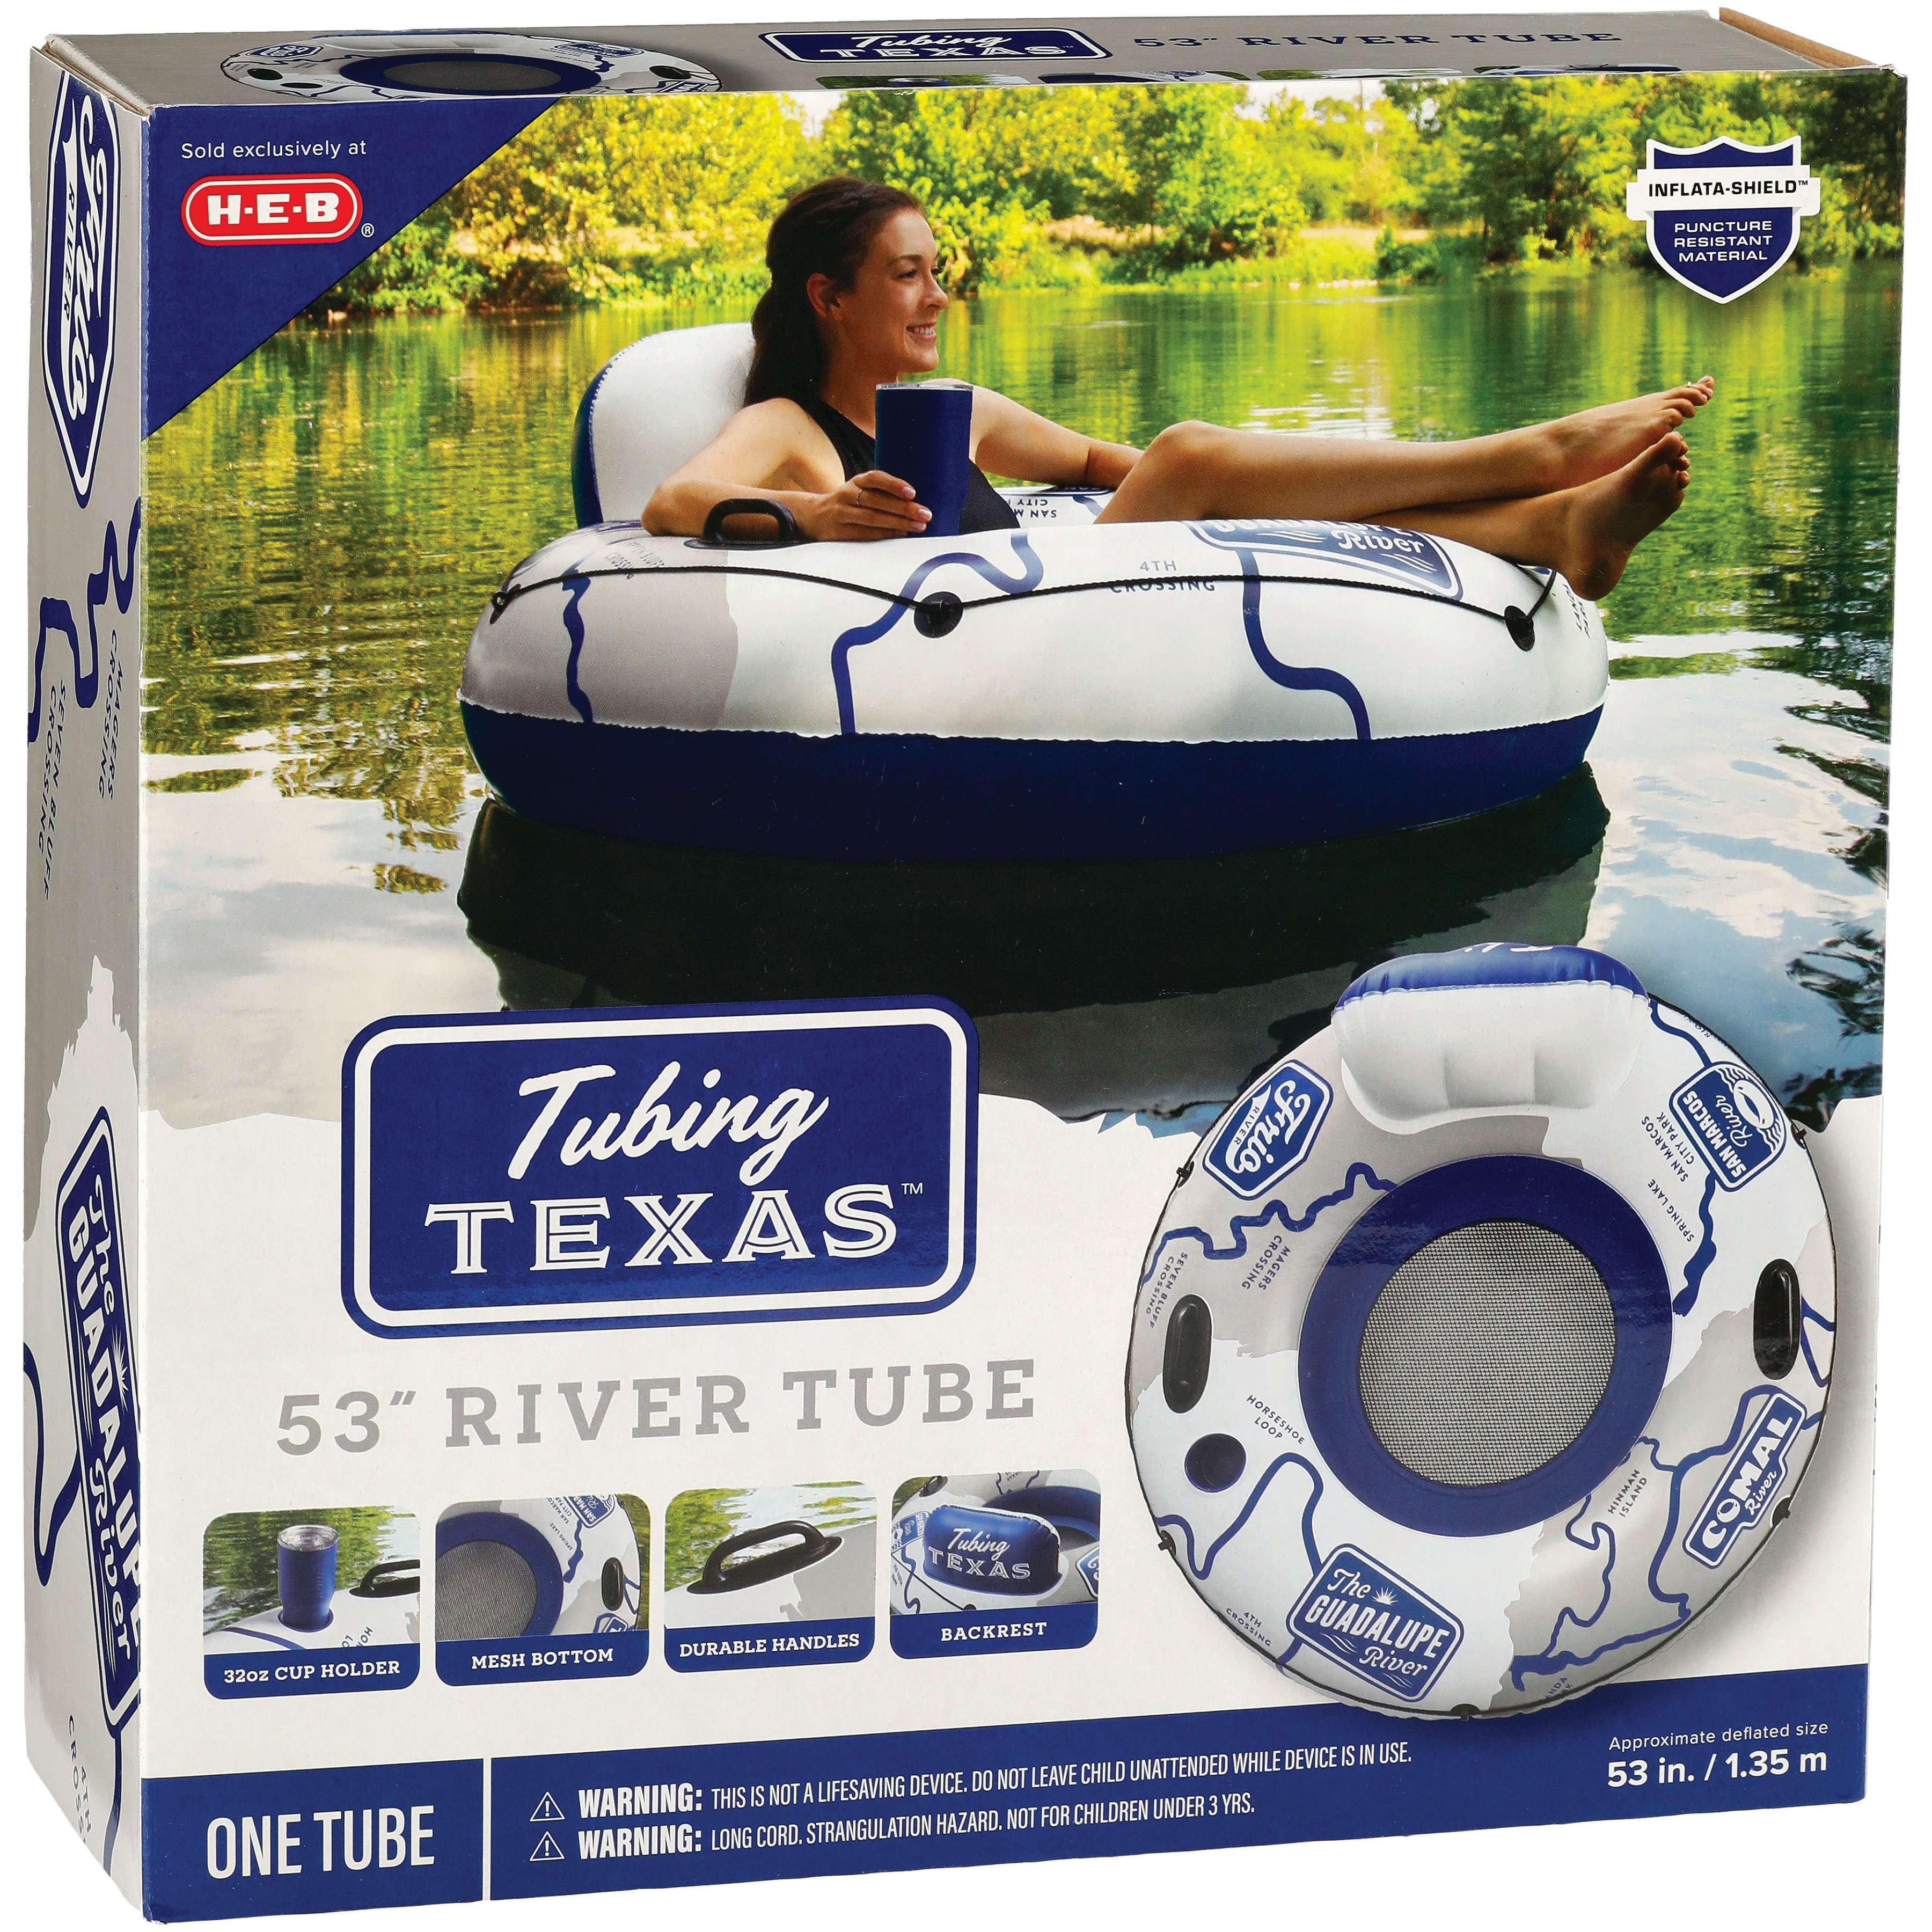 H-E-B Tubing Texas Inflatable River Tube - Gray - Shop Floats at H-E-B